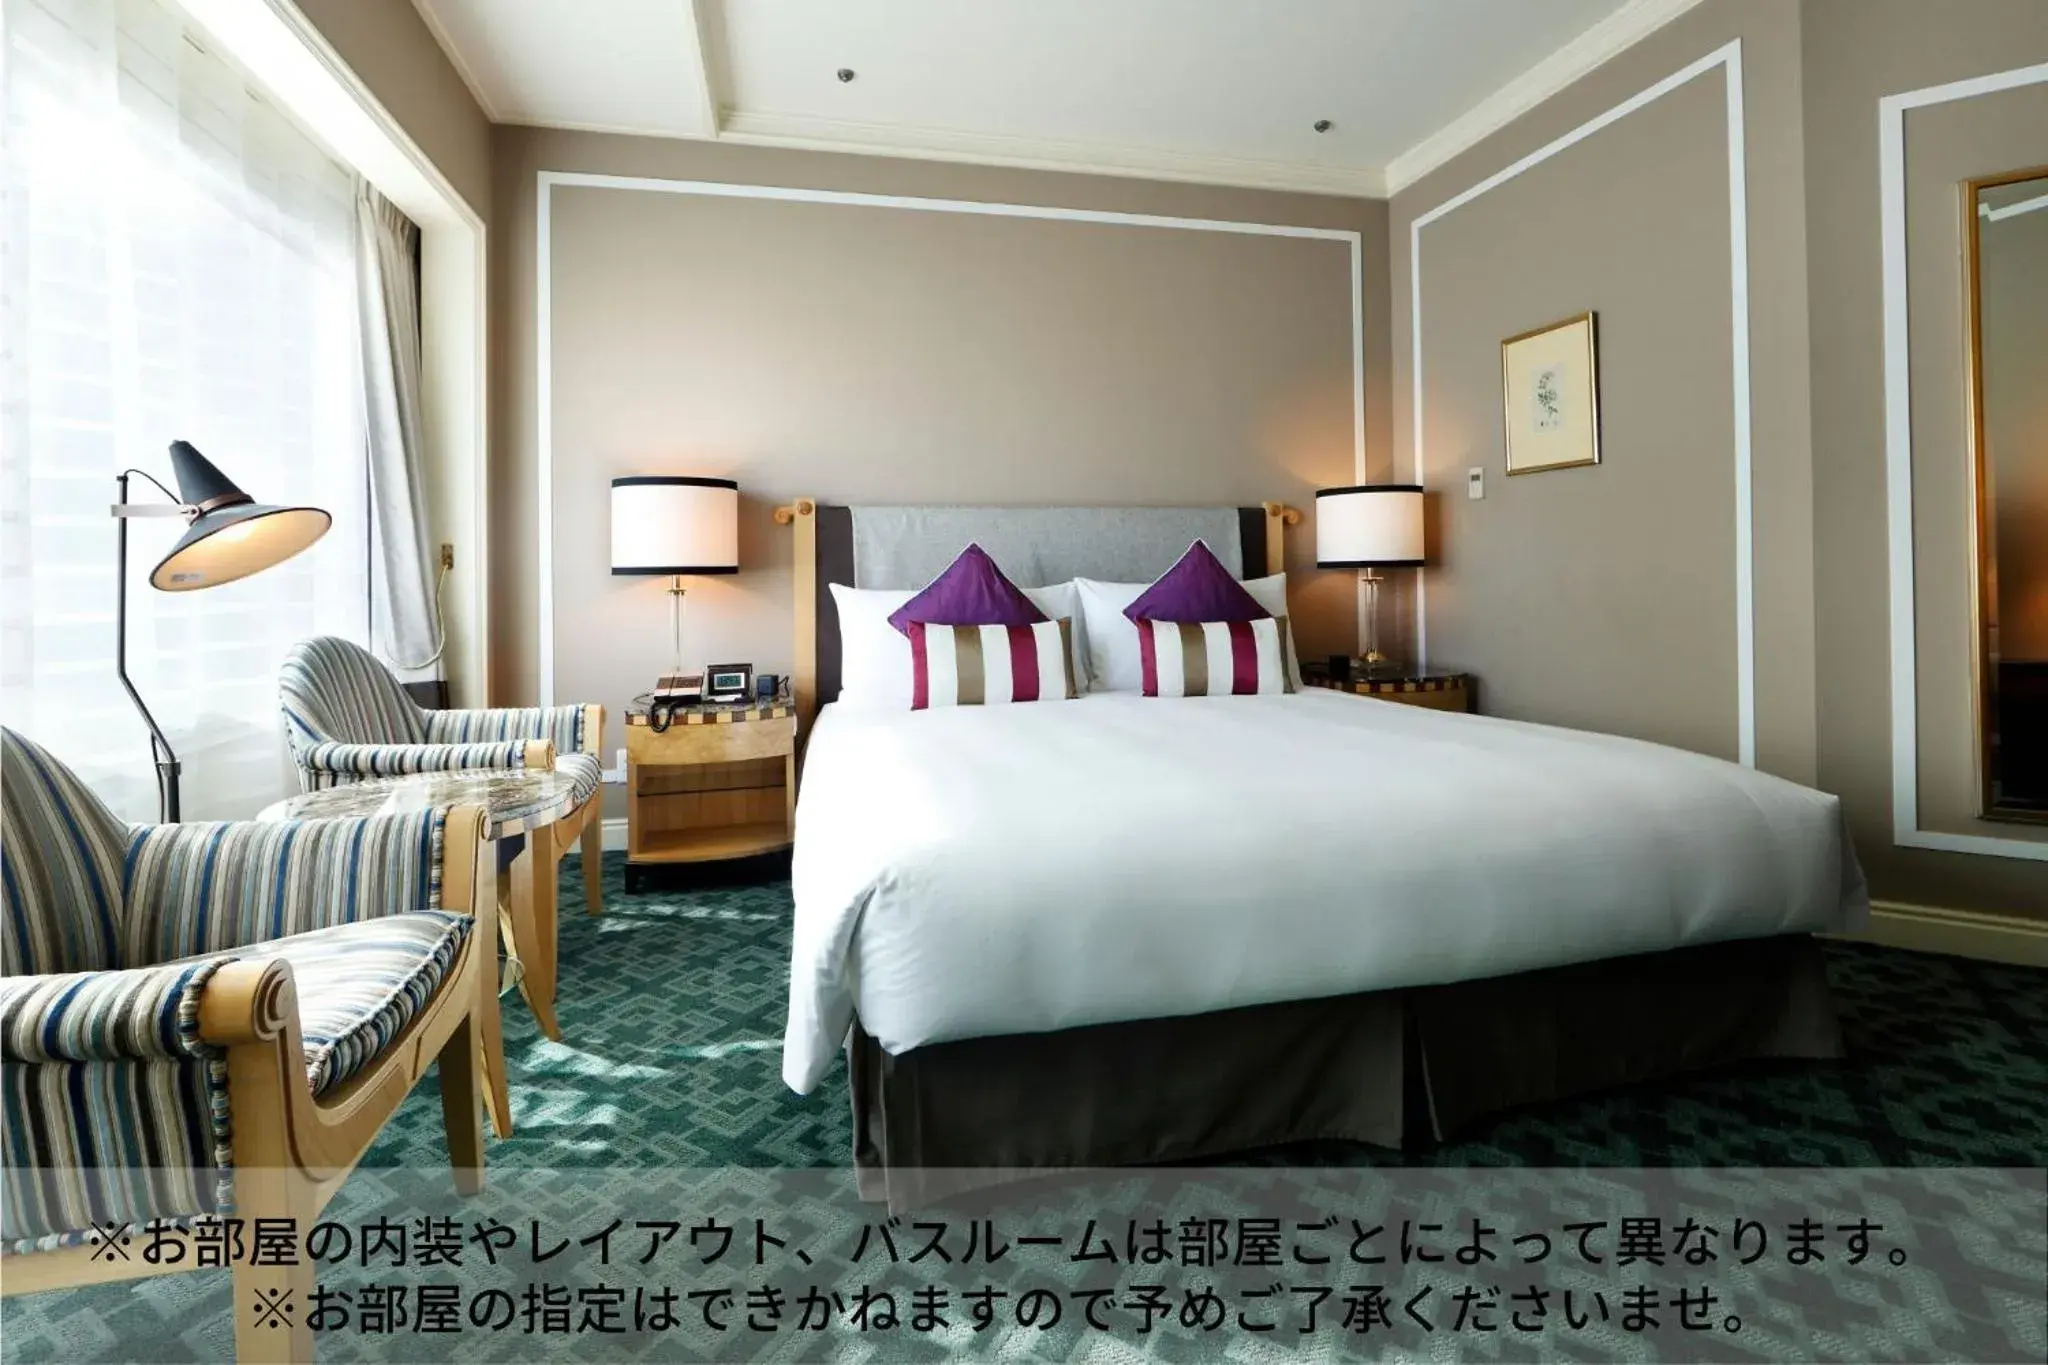 Classical Double Room - single occupancy - Non-Smoking in Hotel Allamanda Aoyama Tokyo